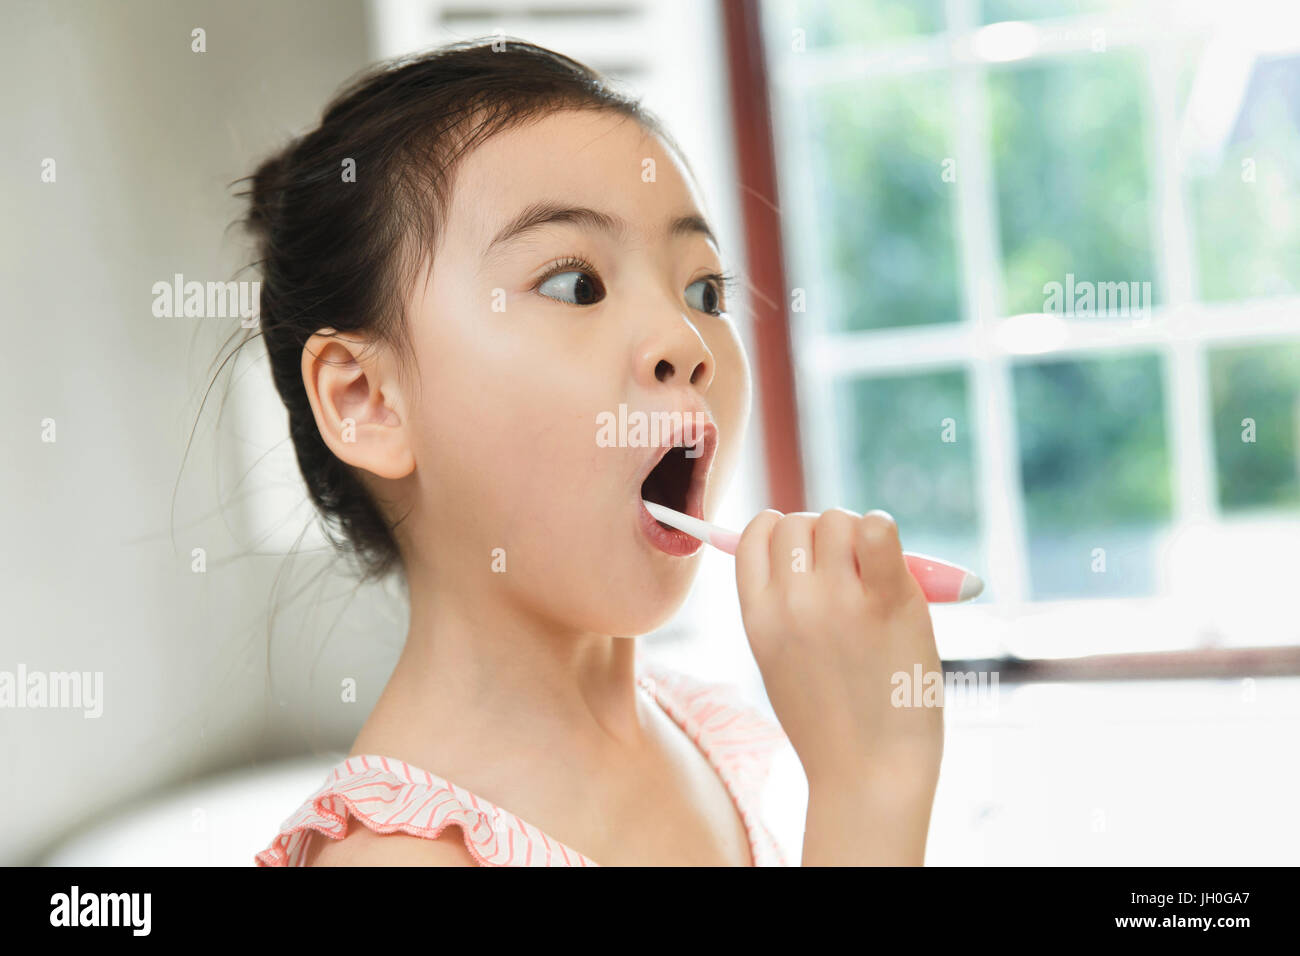 Little girl brushing teeth Stock Photo